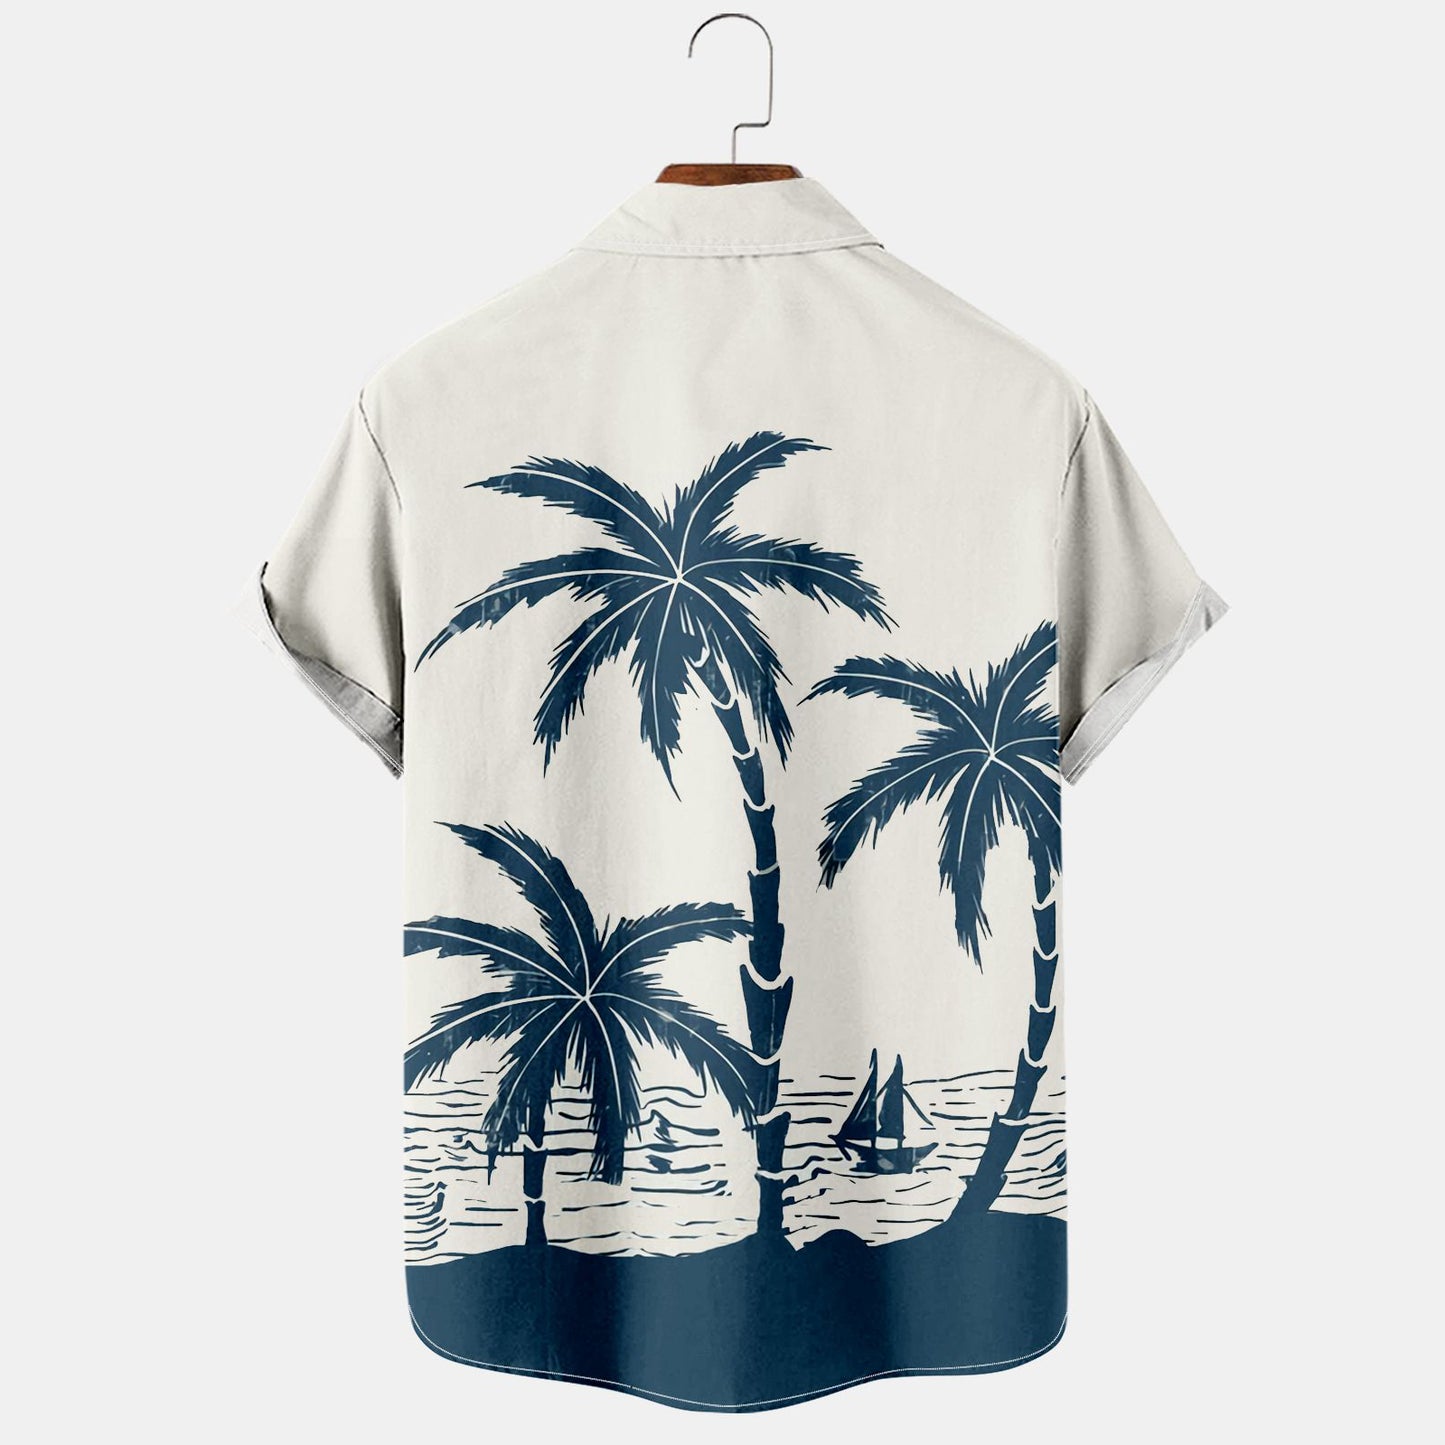 Casual coconut tree print shirt